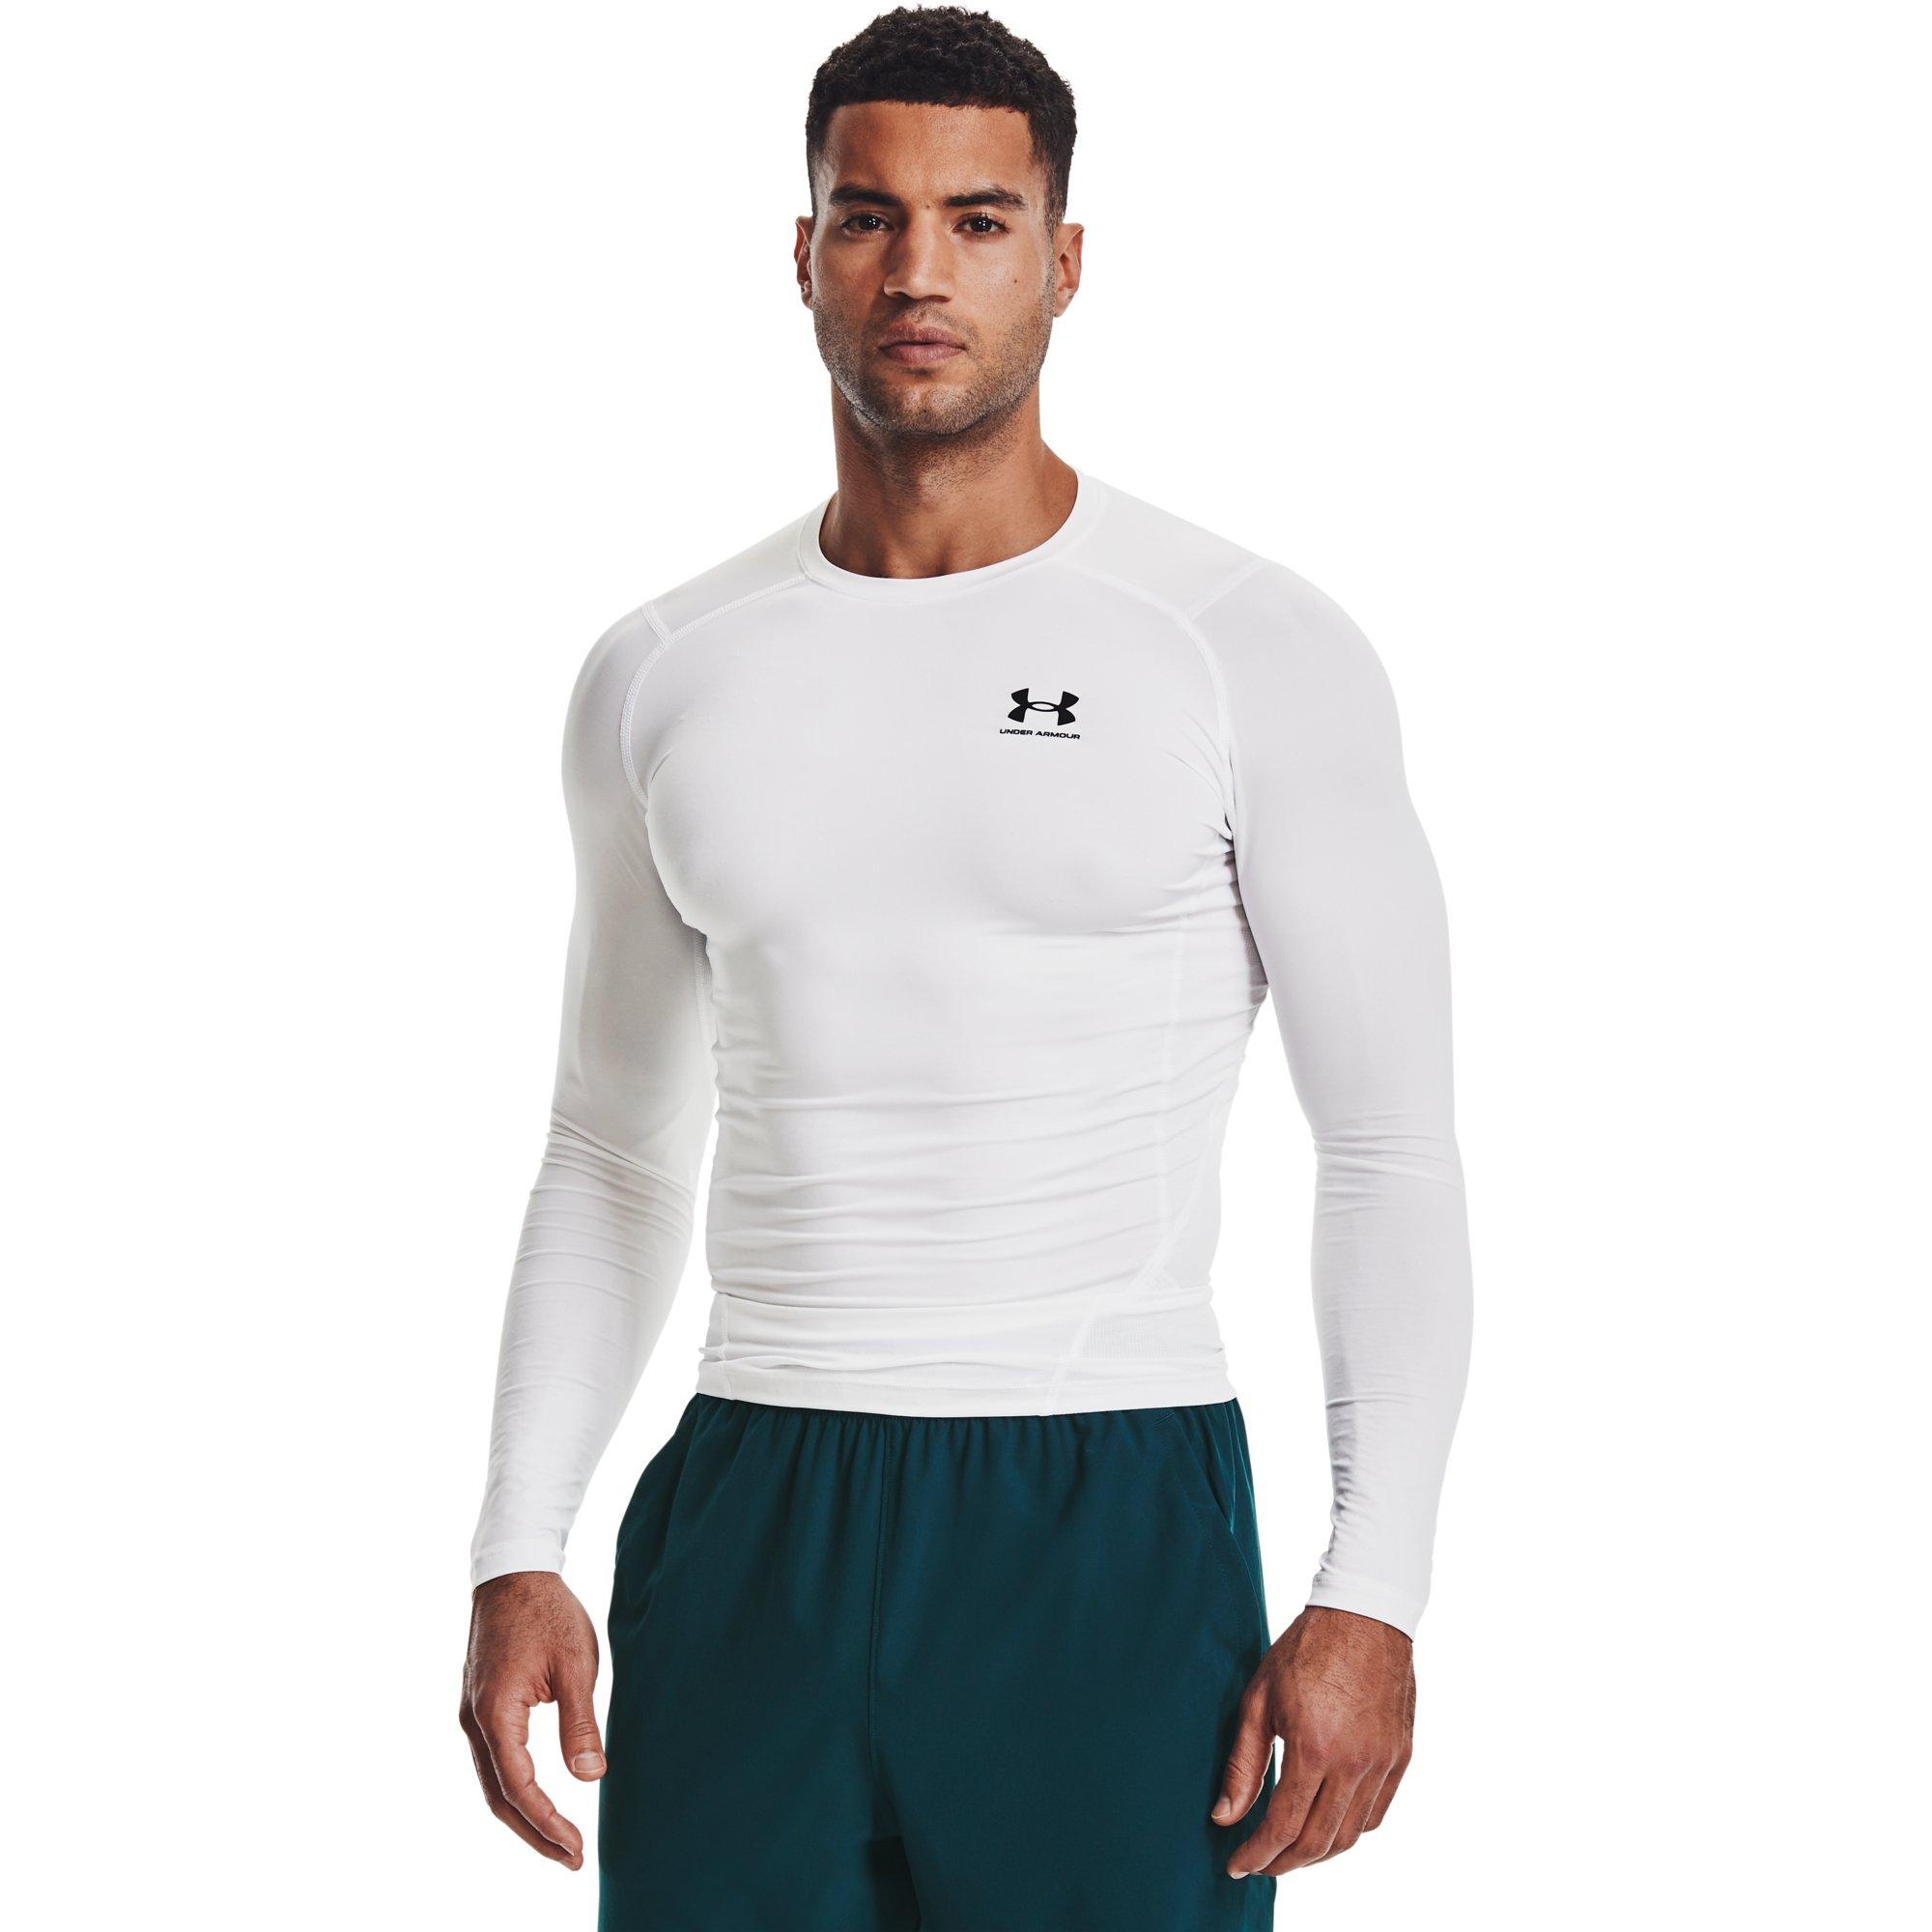 Under Armour Men's HeatGear Compression Long-Sleeve T-Shirt